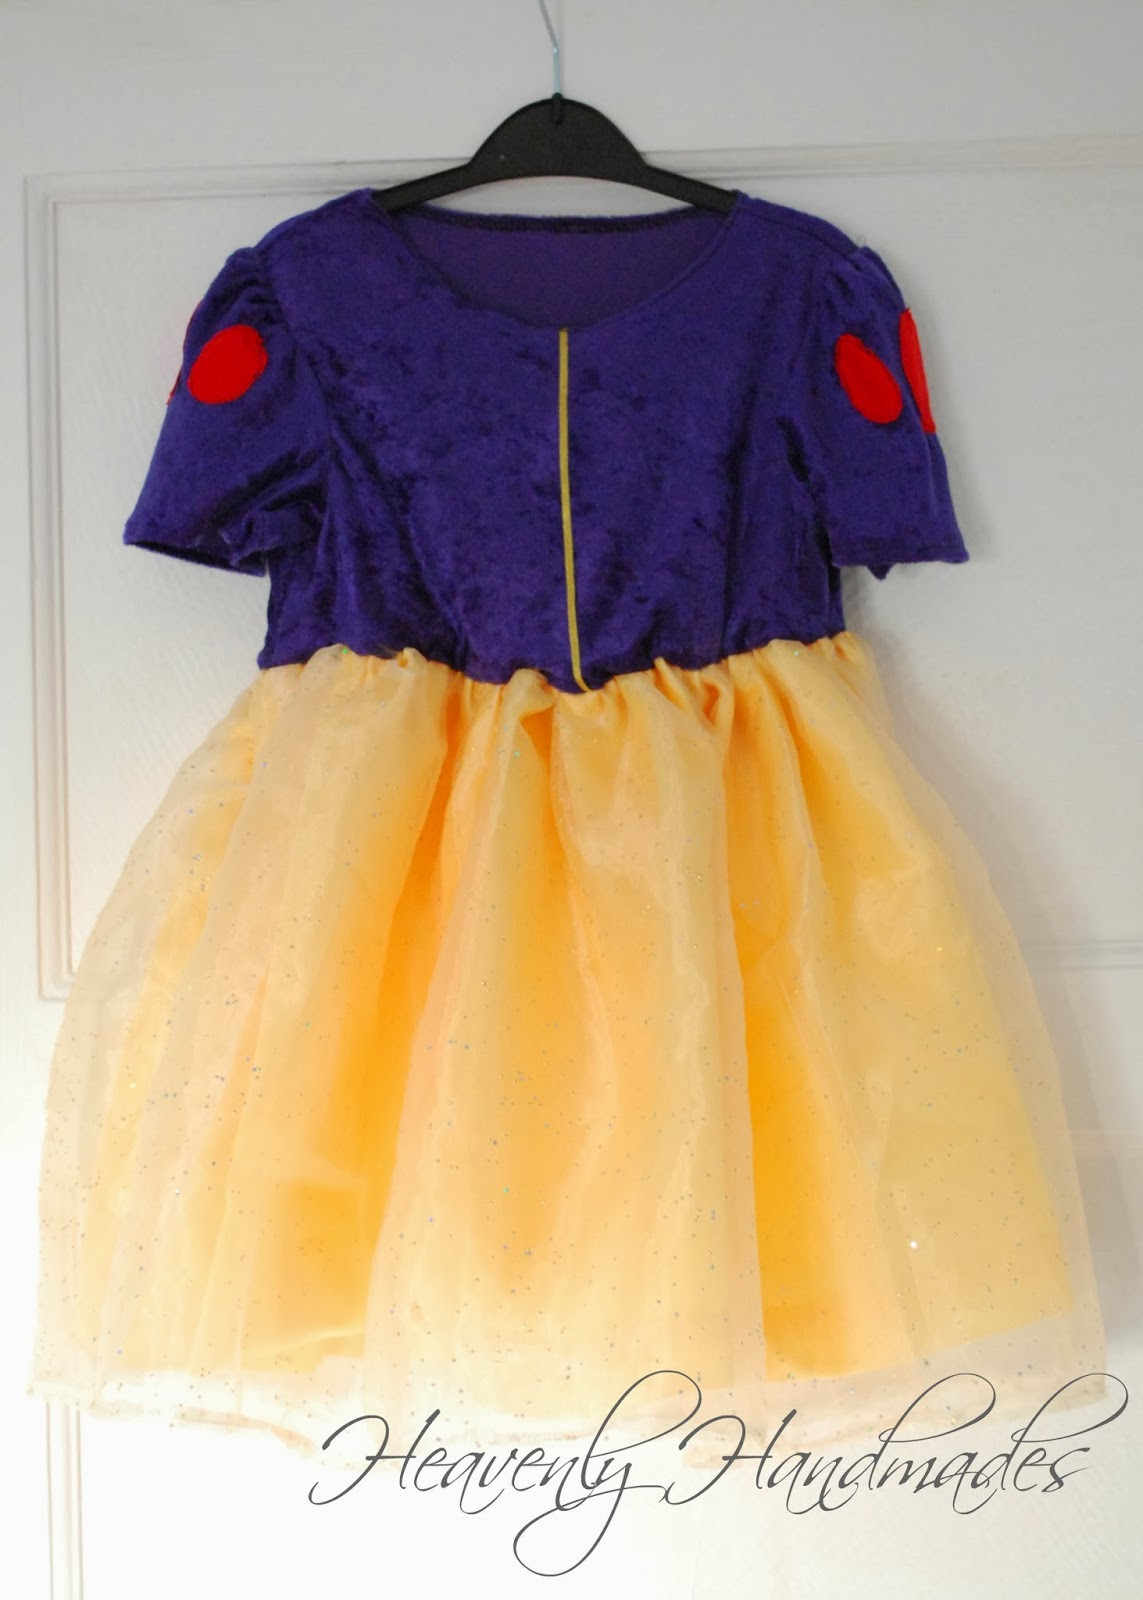 DIY Snow White Costume Toddler
 DIY Snow White Dress version 2 Heavenly Handmades